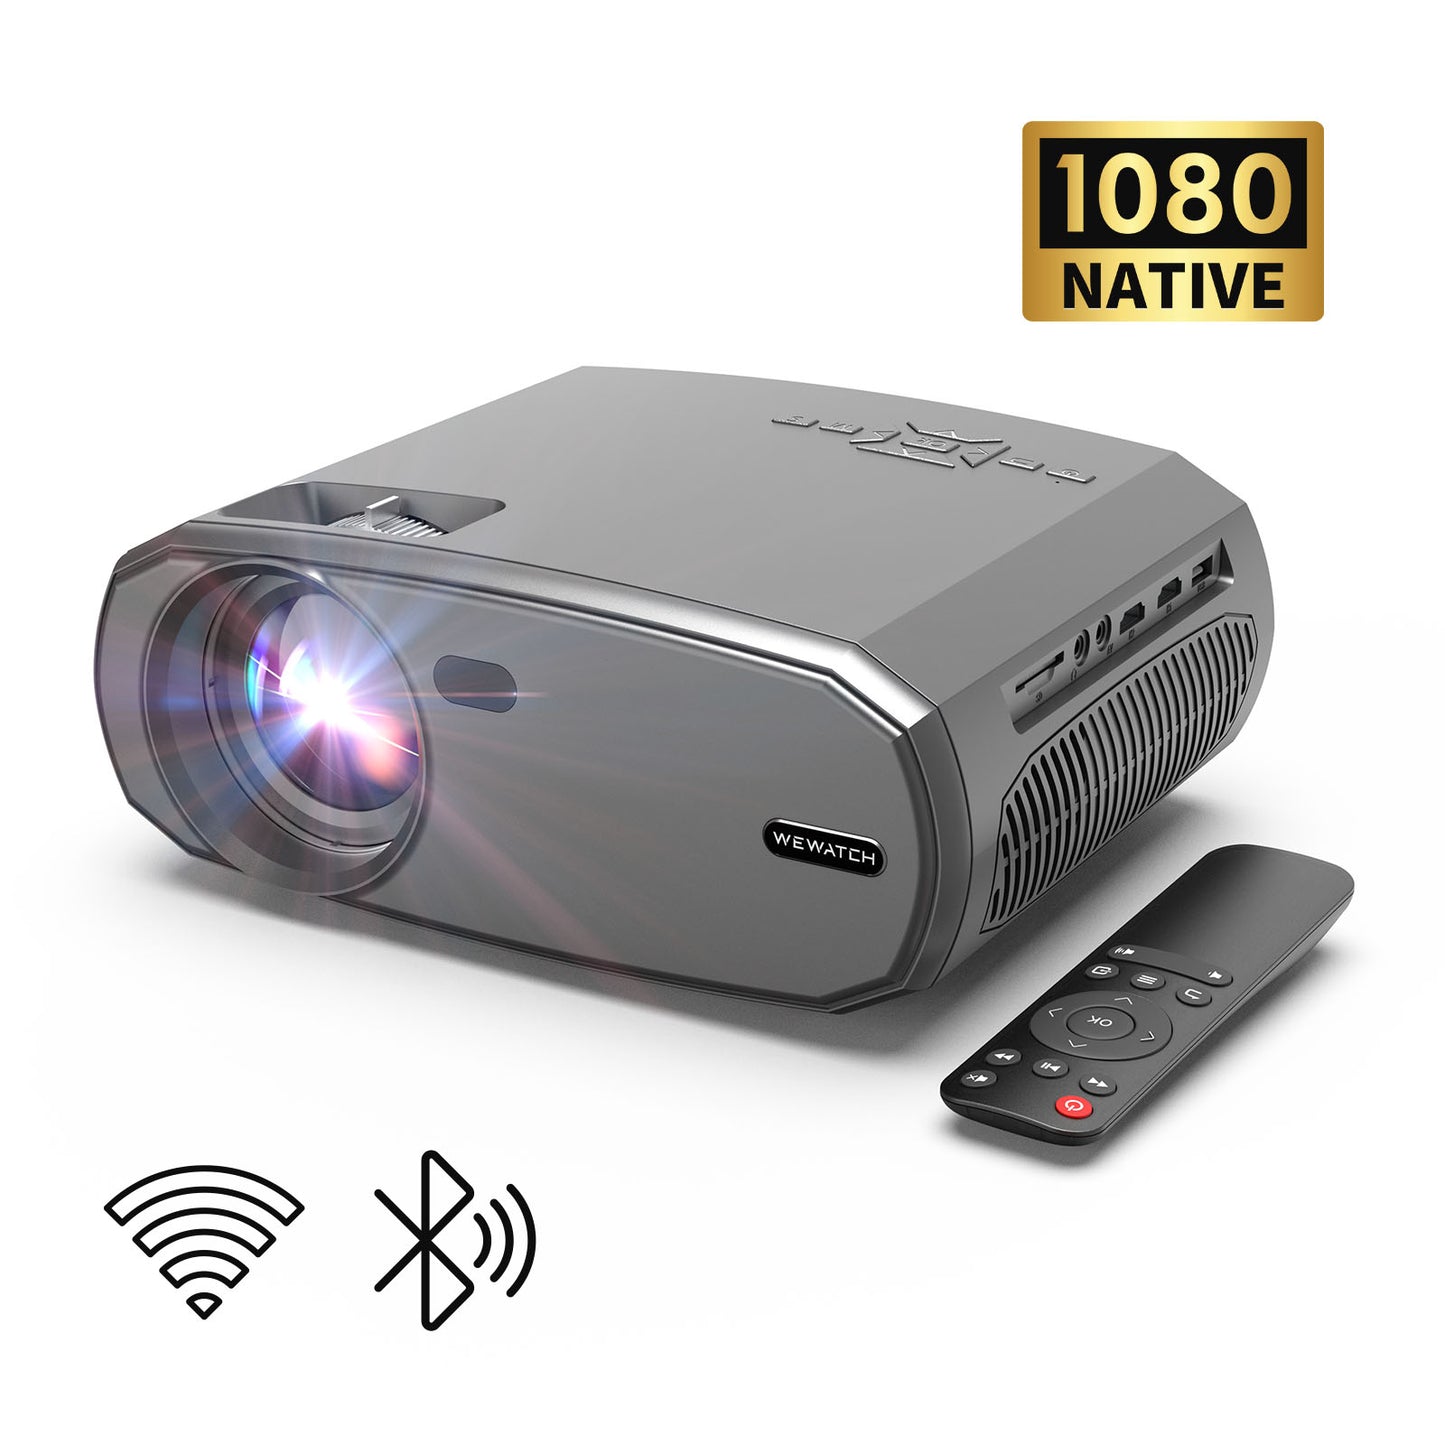 WEWATCH V50G Projector: 1080p Display | 230 ANSI Lumens | WiFi & Bluetooth